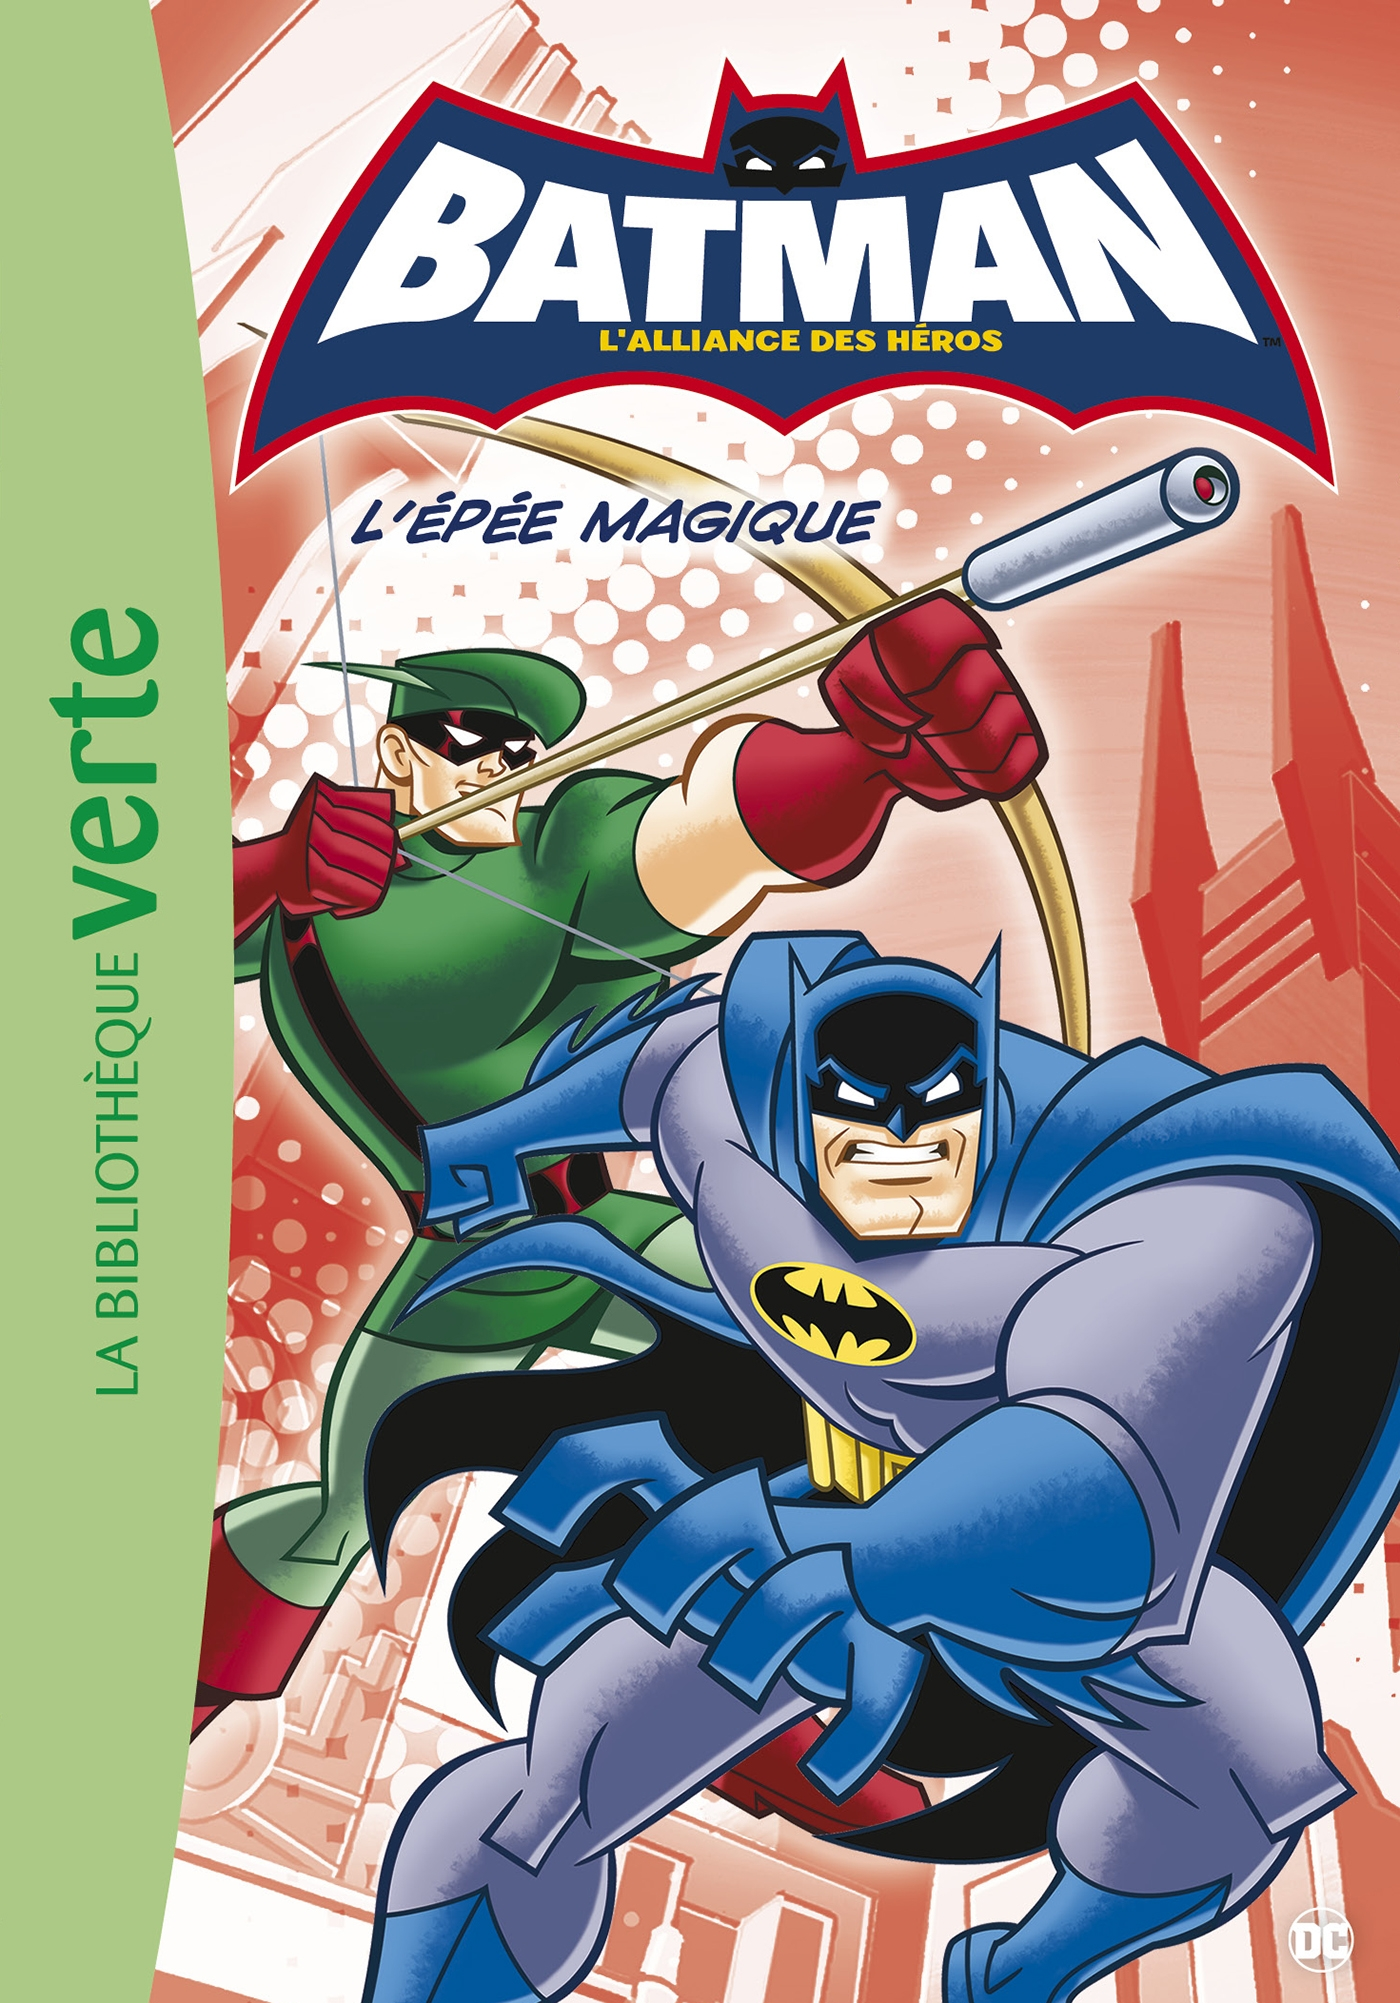 Ebook Batman 02 - L'épée magique por Warner Bros - 7Switch